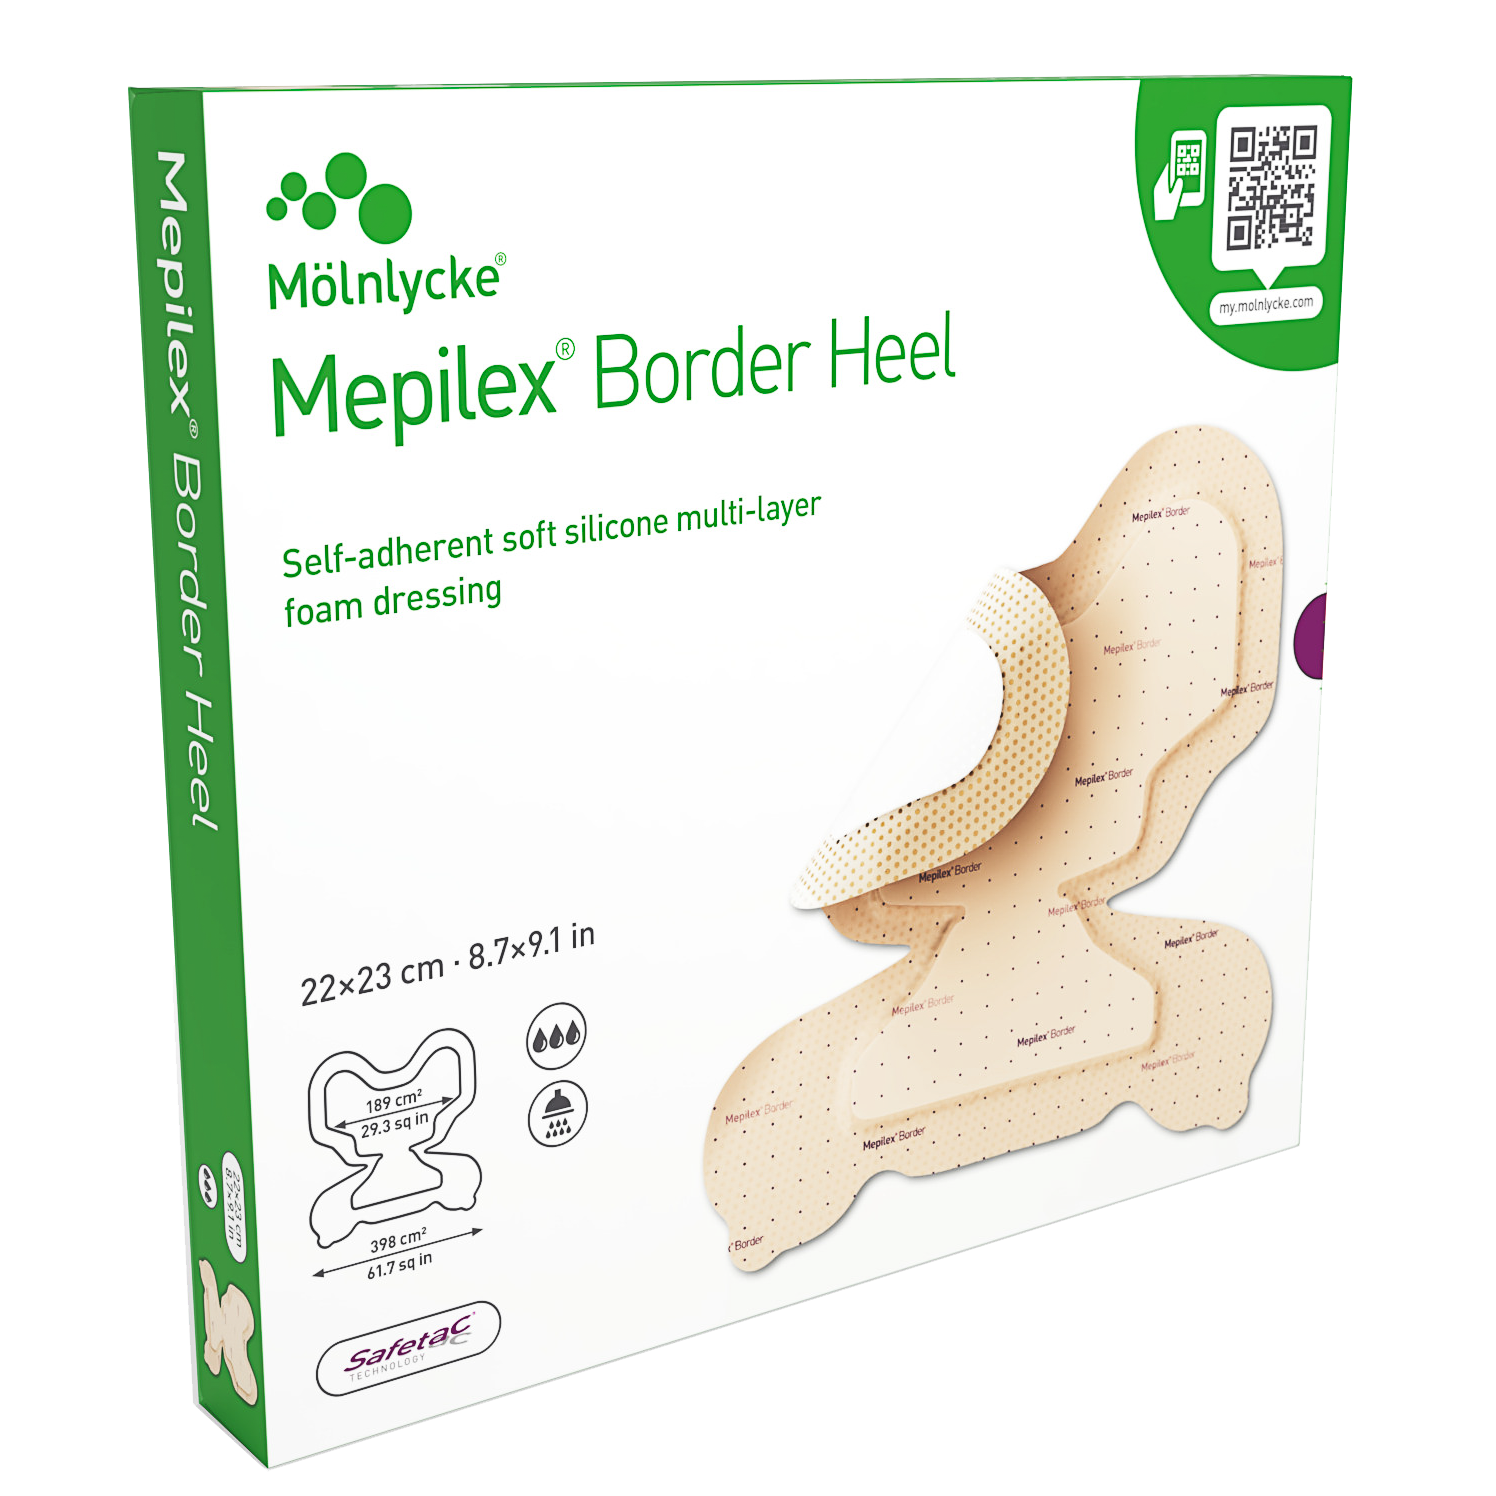 Mepilex Border Heel